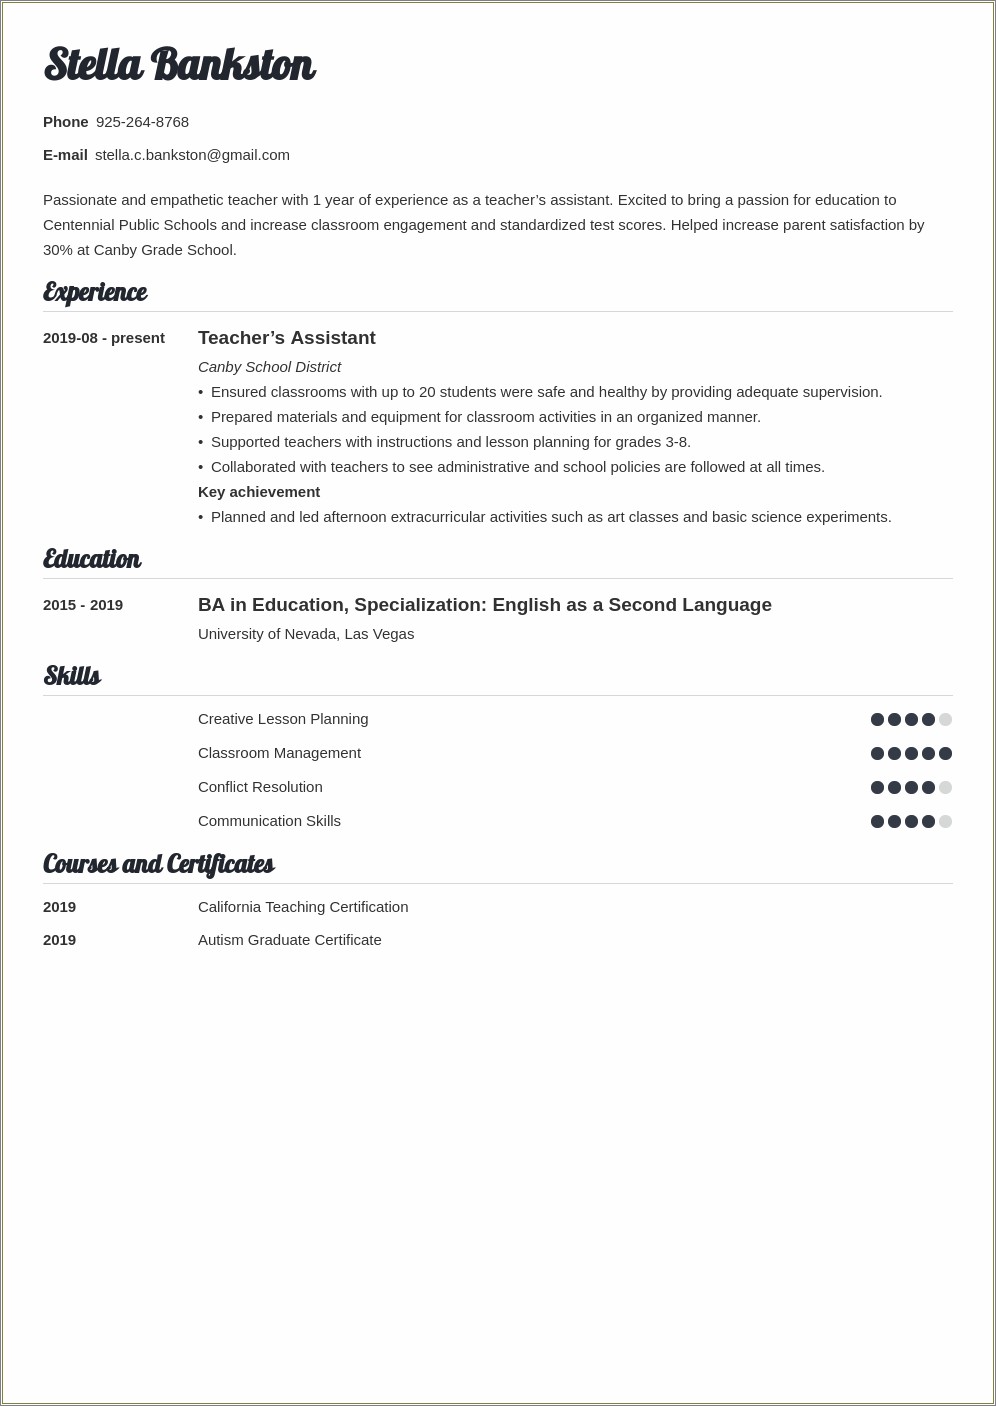 Resume Format For Teaching Job Application